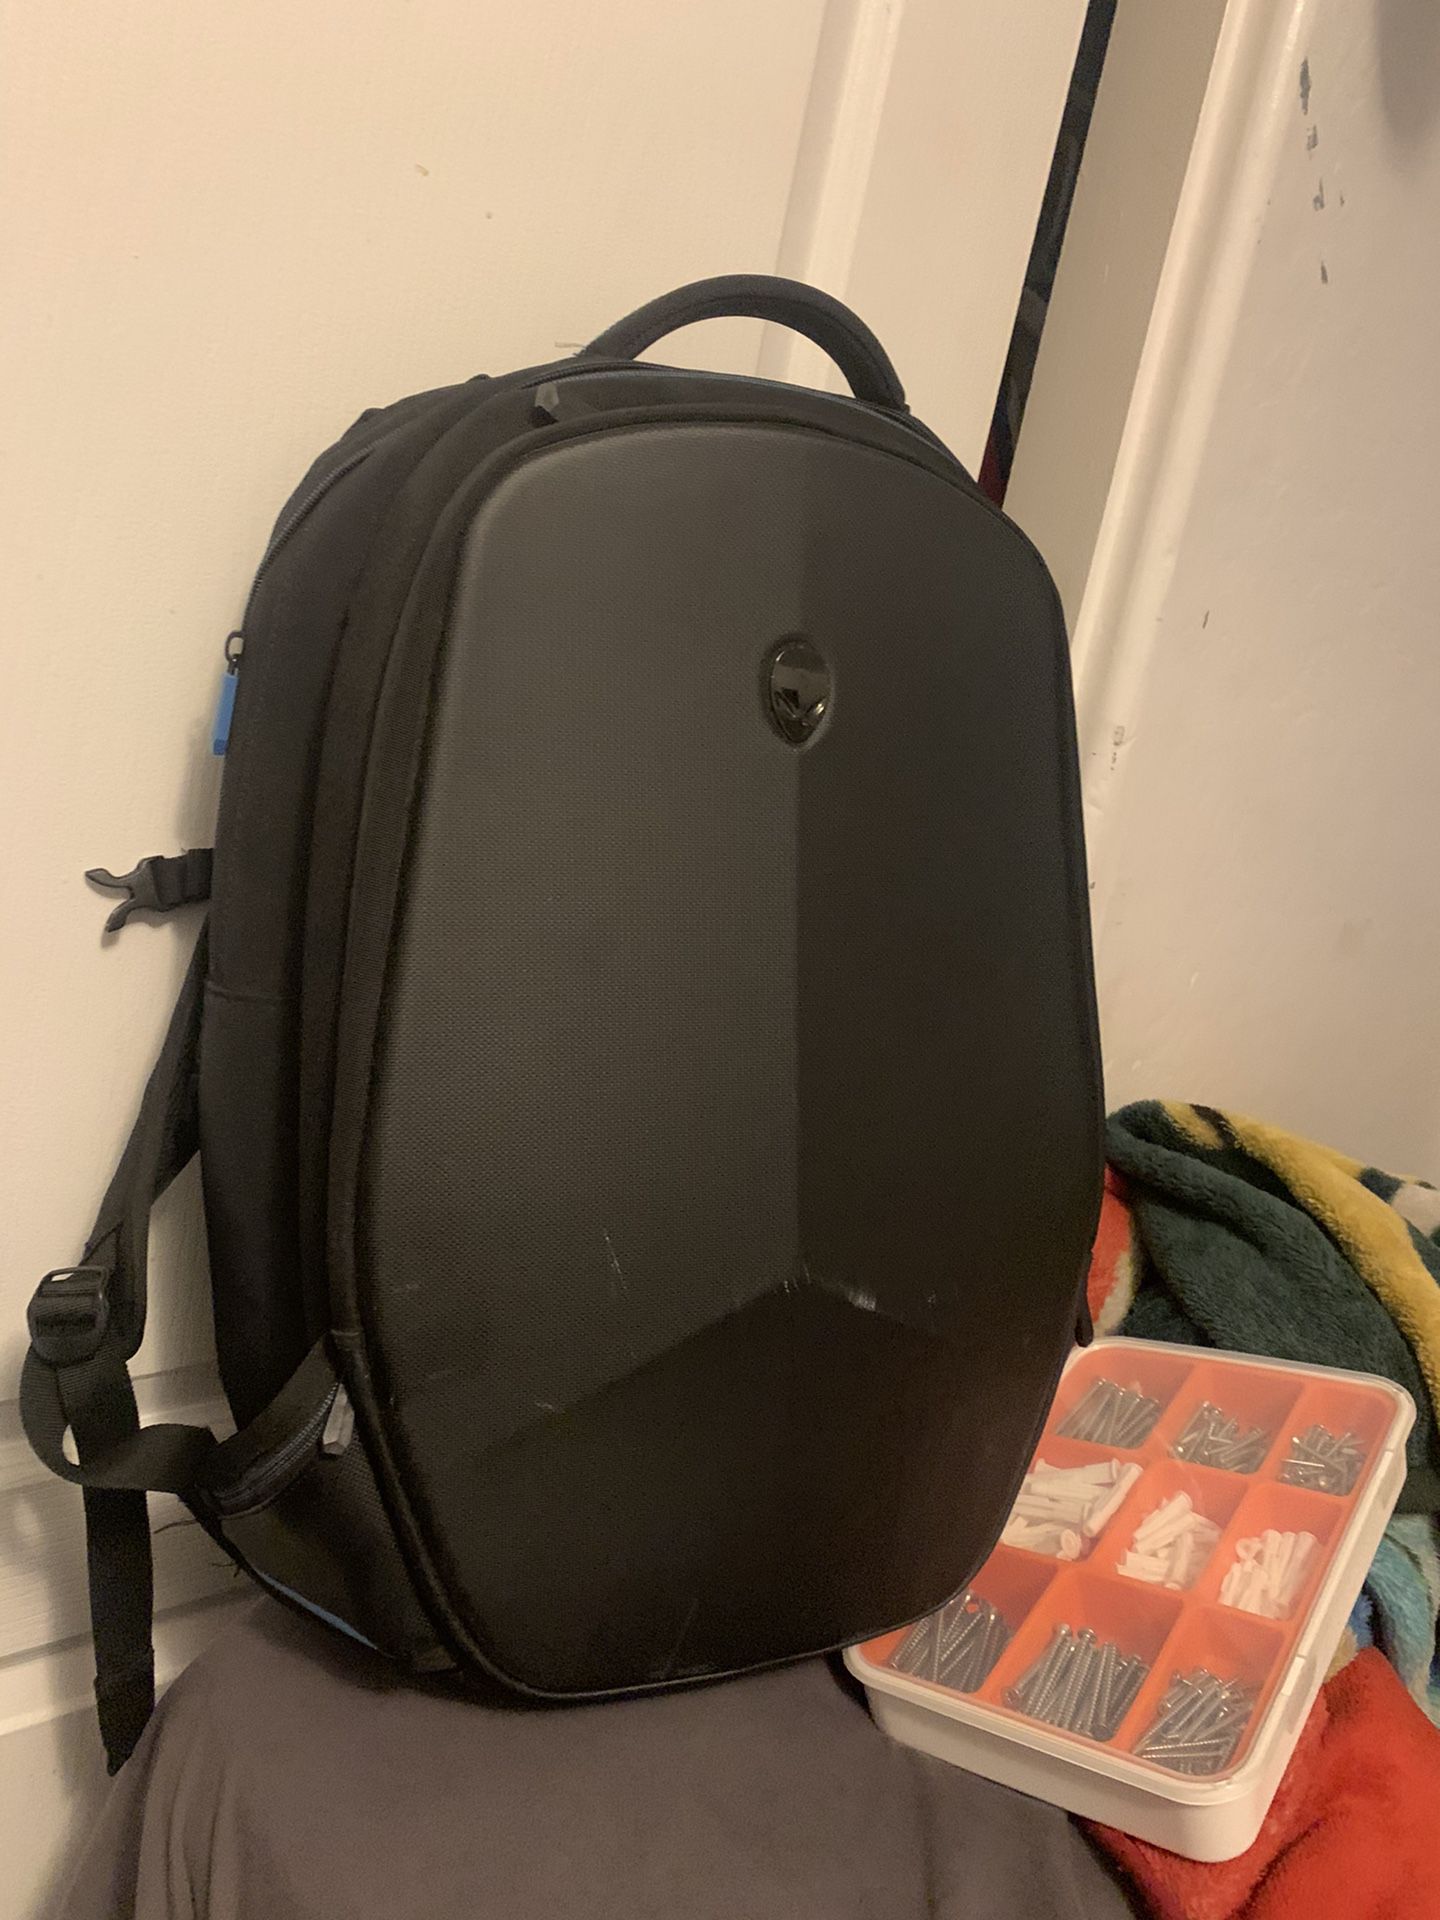 Alienware gaming laptop backpack